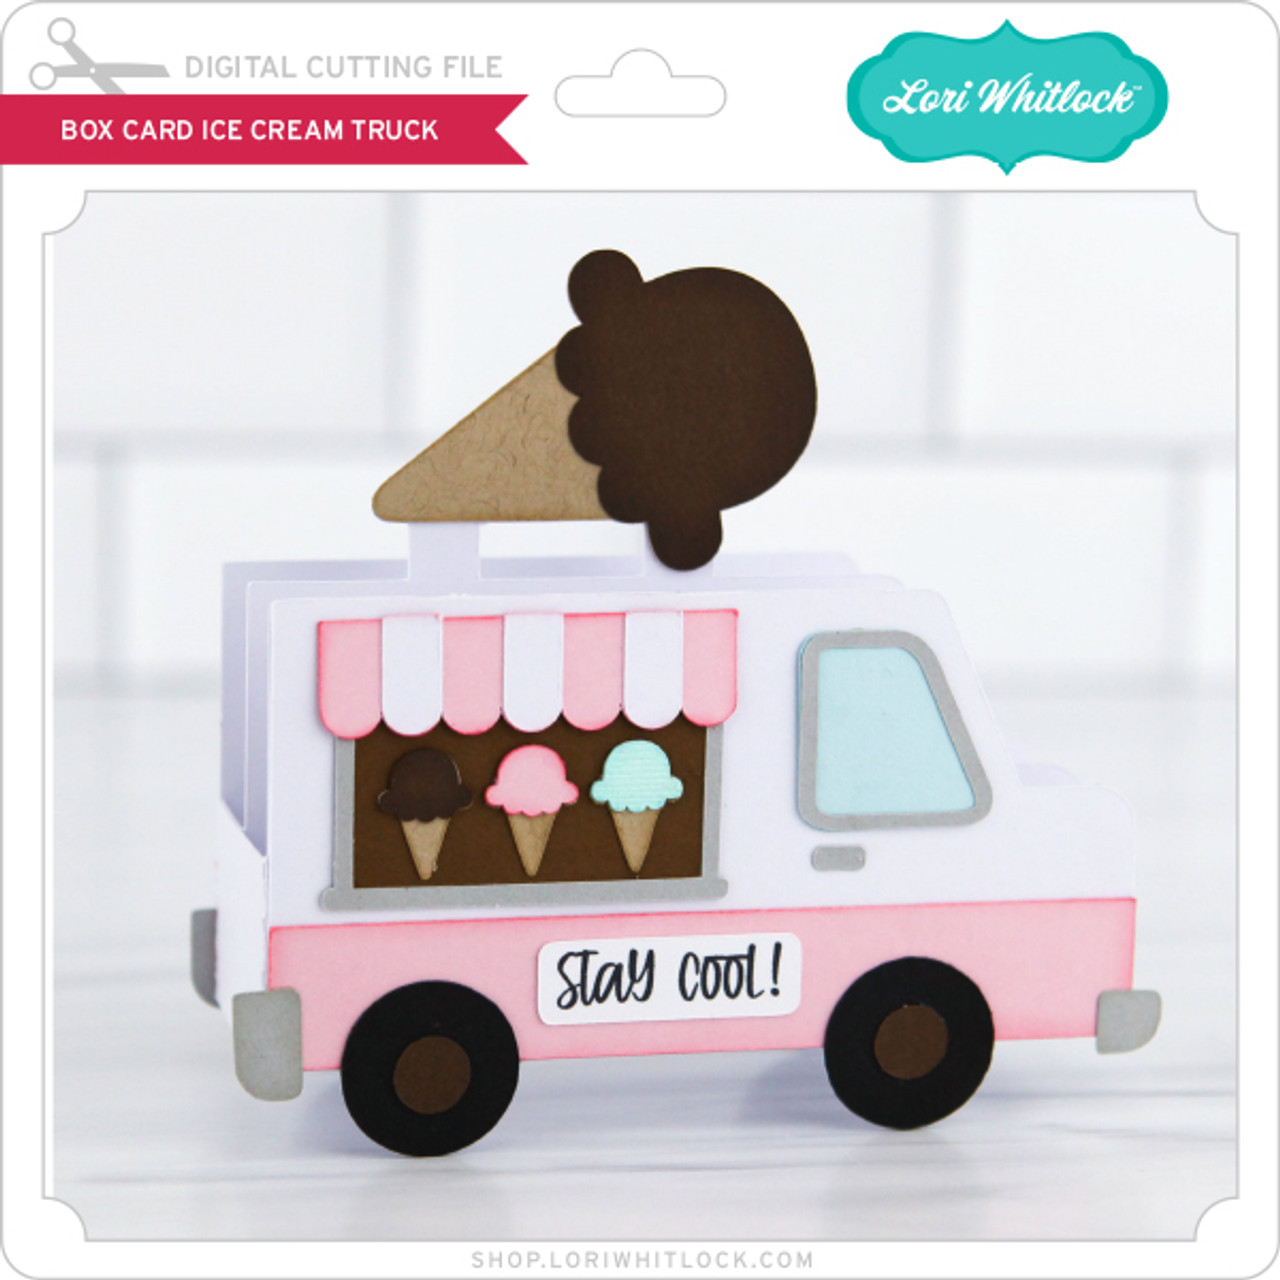 Ice Cream Stand SVG Cut File